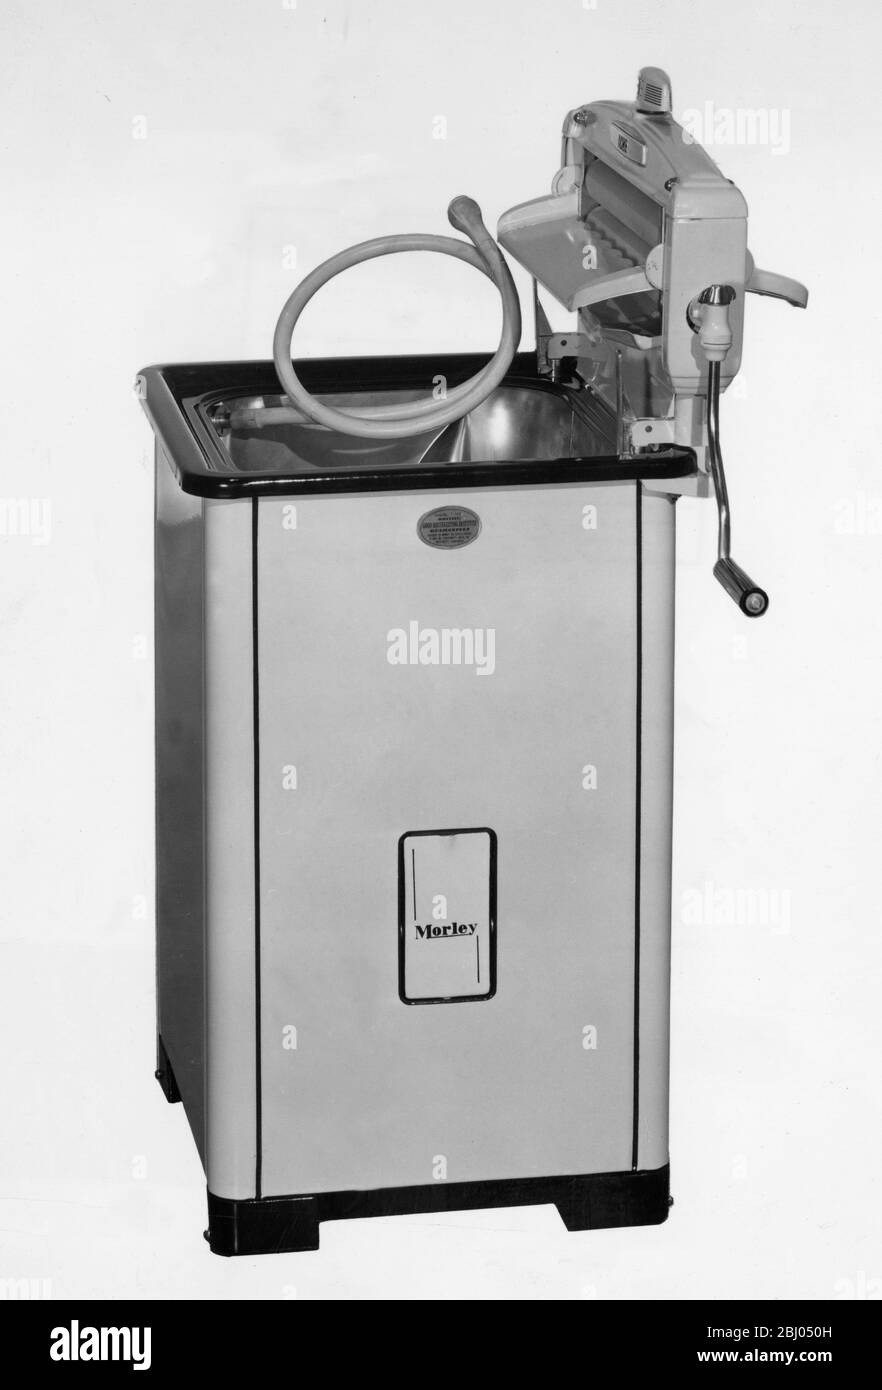 Morley - gas/electric washing machine - Stock Photo